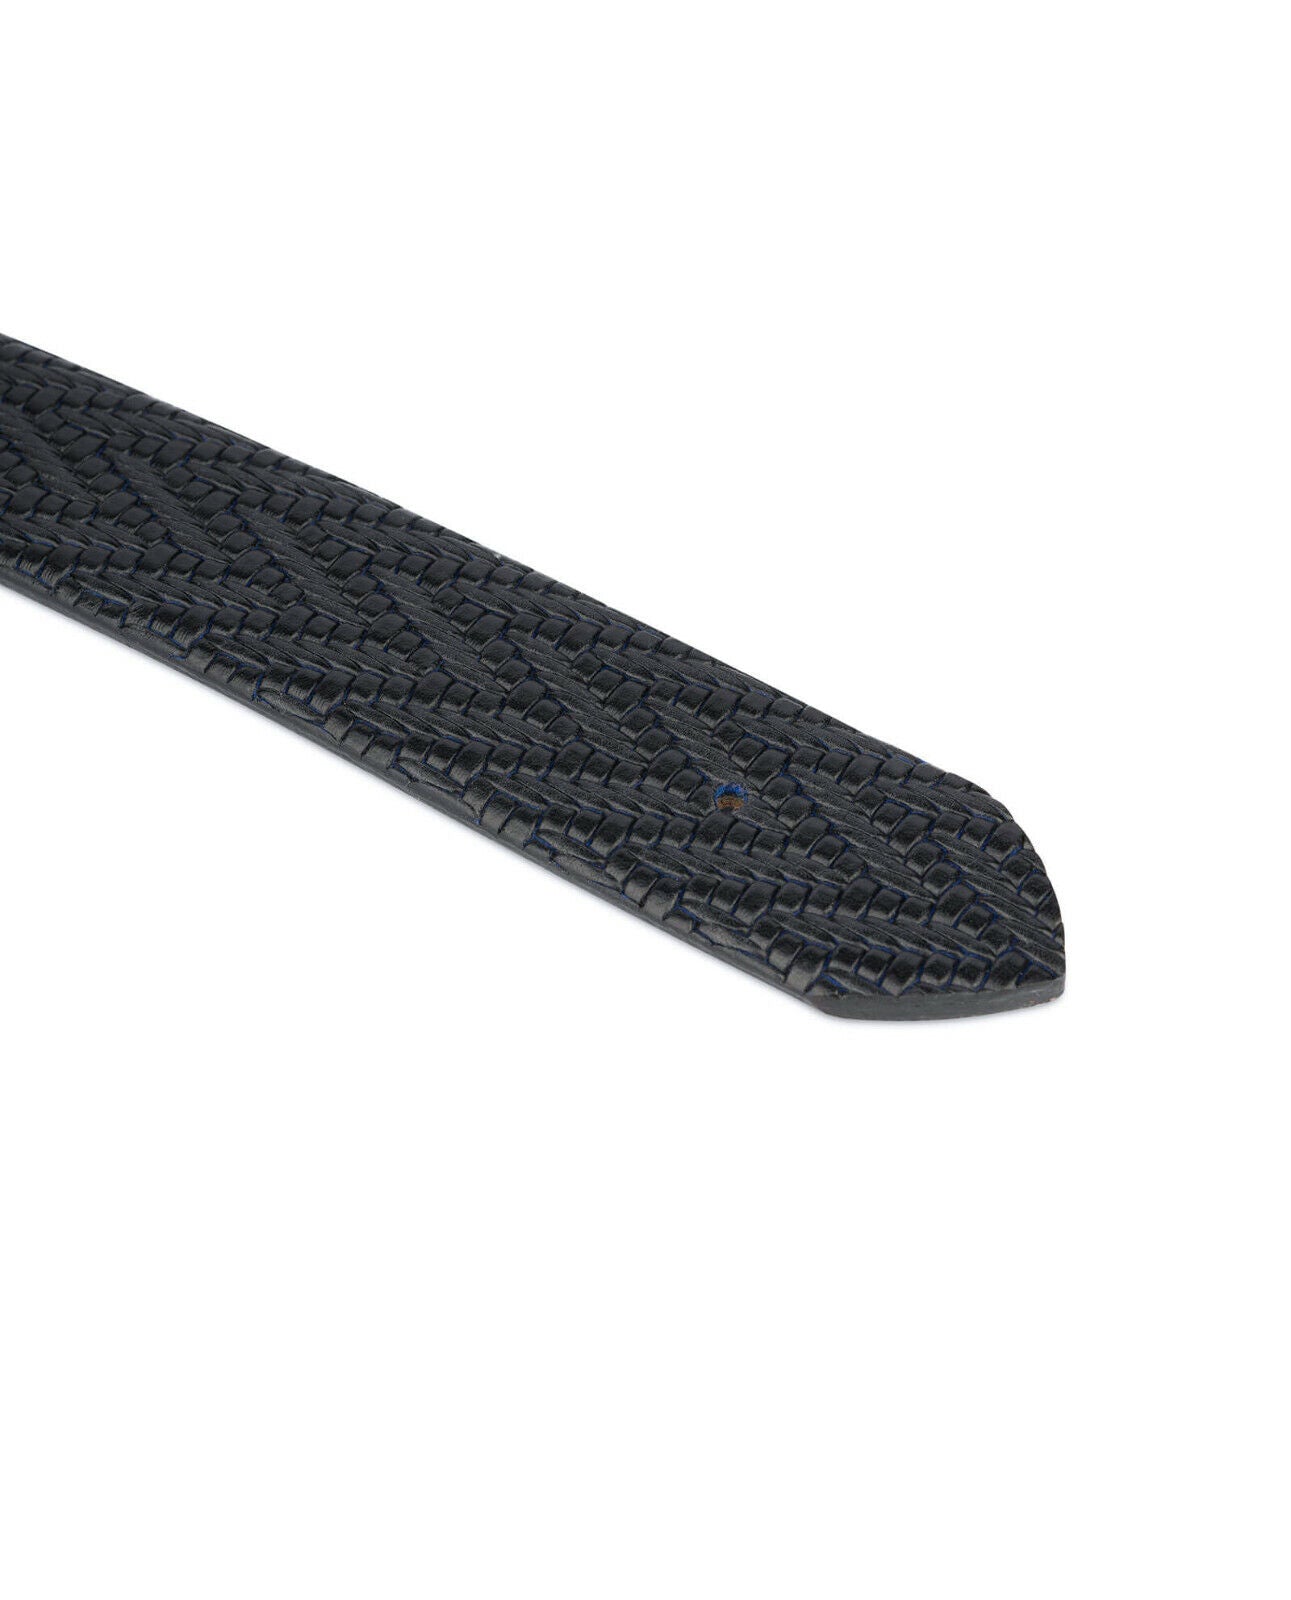 Mens Orange Belt Leather Strap For Louis Vuitton Buckle Replacement 35mm  Premium